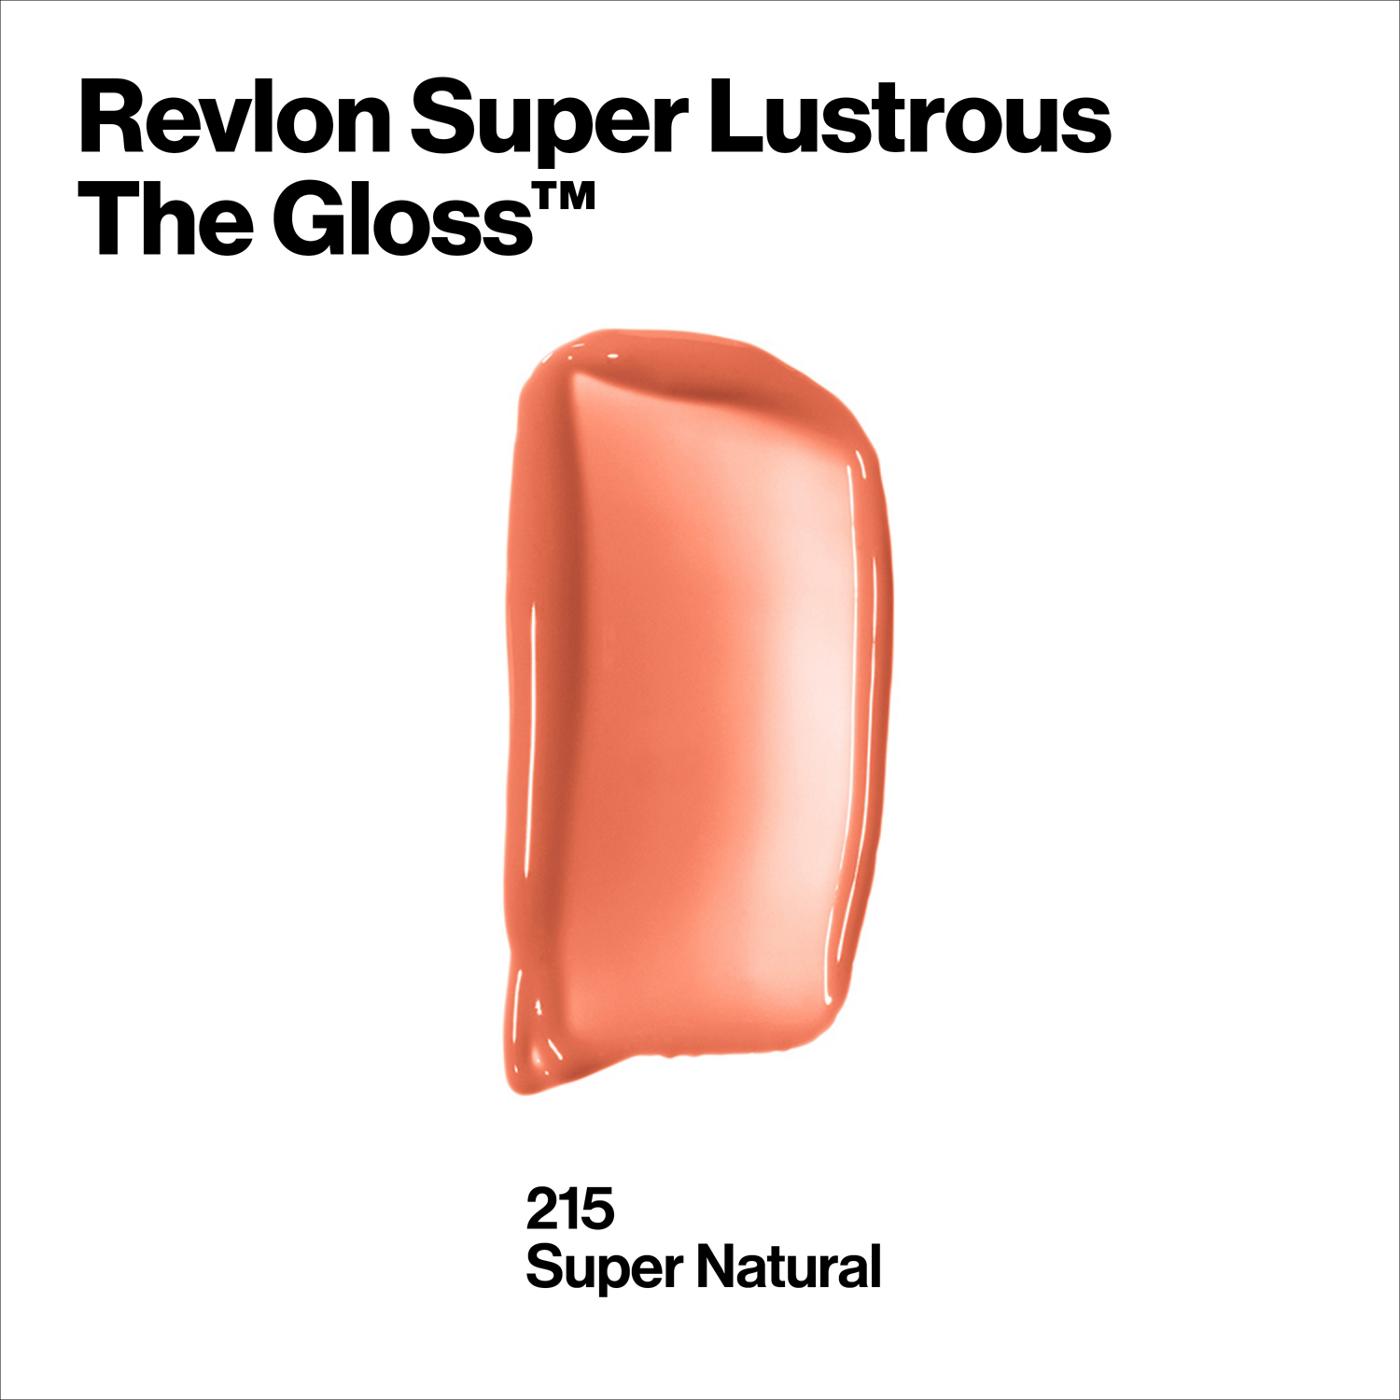 Revlon Super Lustrous The Gloss, 215 Super Natural; image 8 of 9